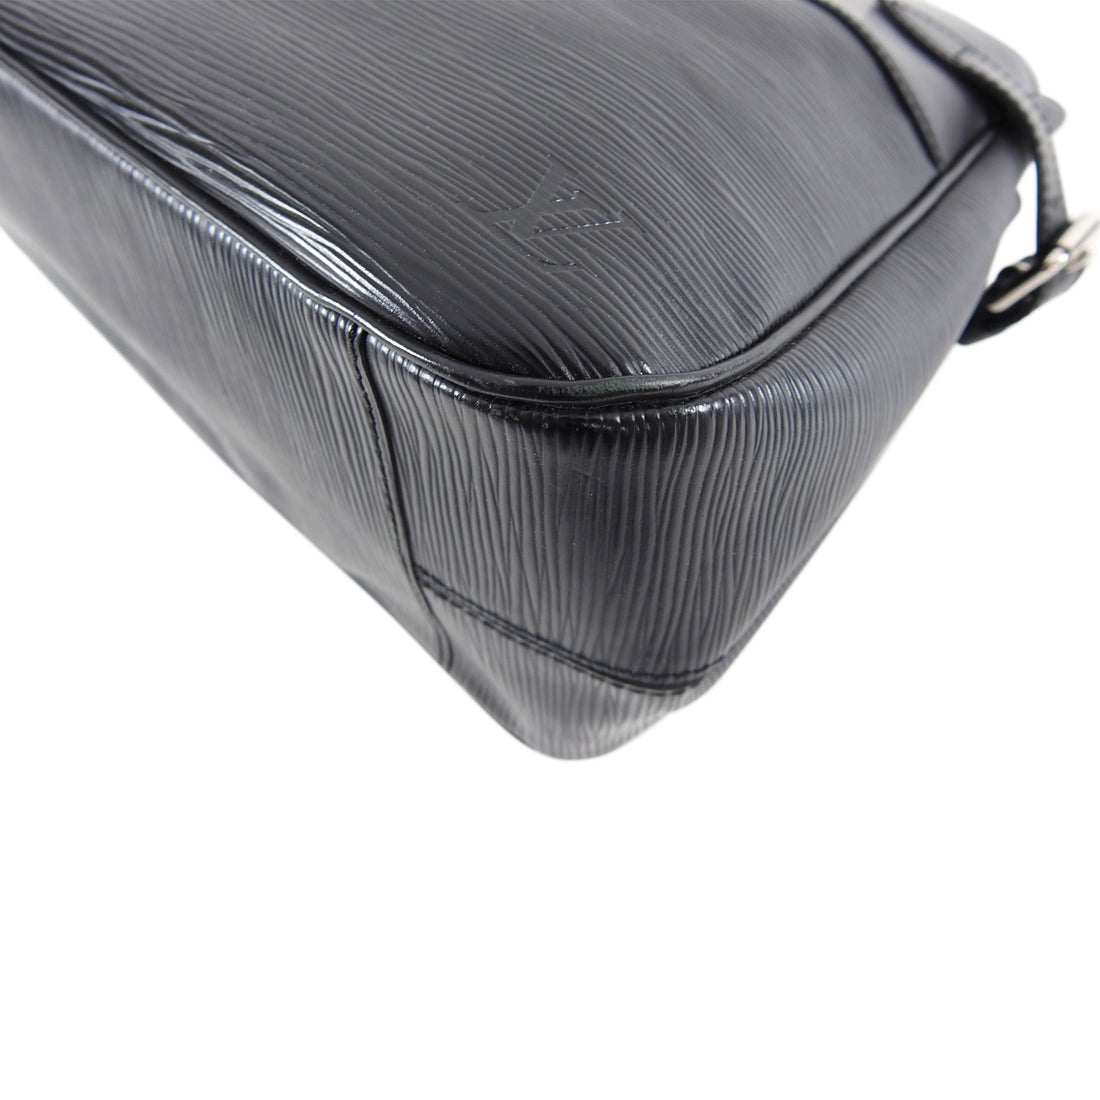 Louis Vuitton Vintage - Epi Passy PM - Black - Epi Leather Handbag - Luxury  High Quality - Avvenice